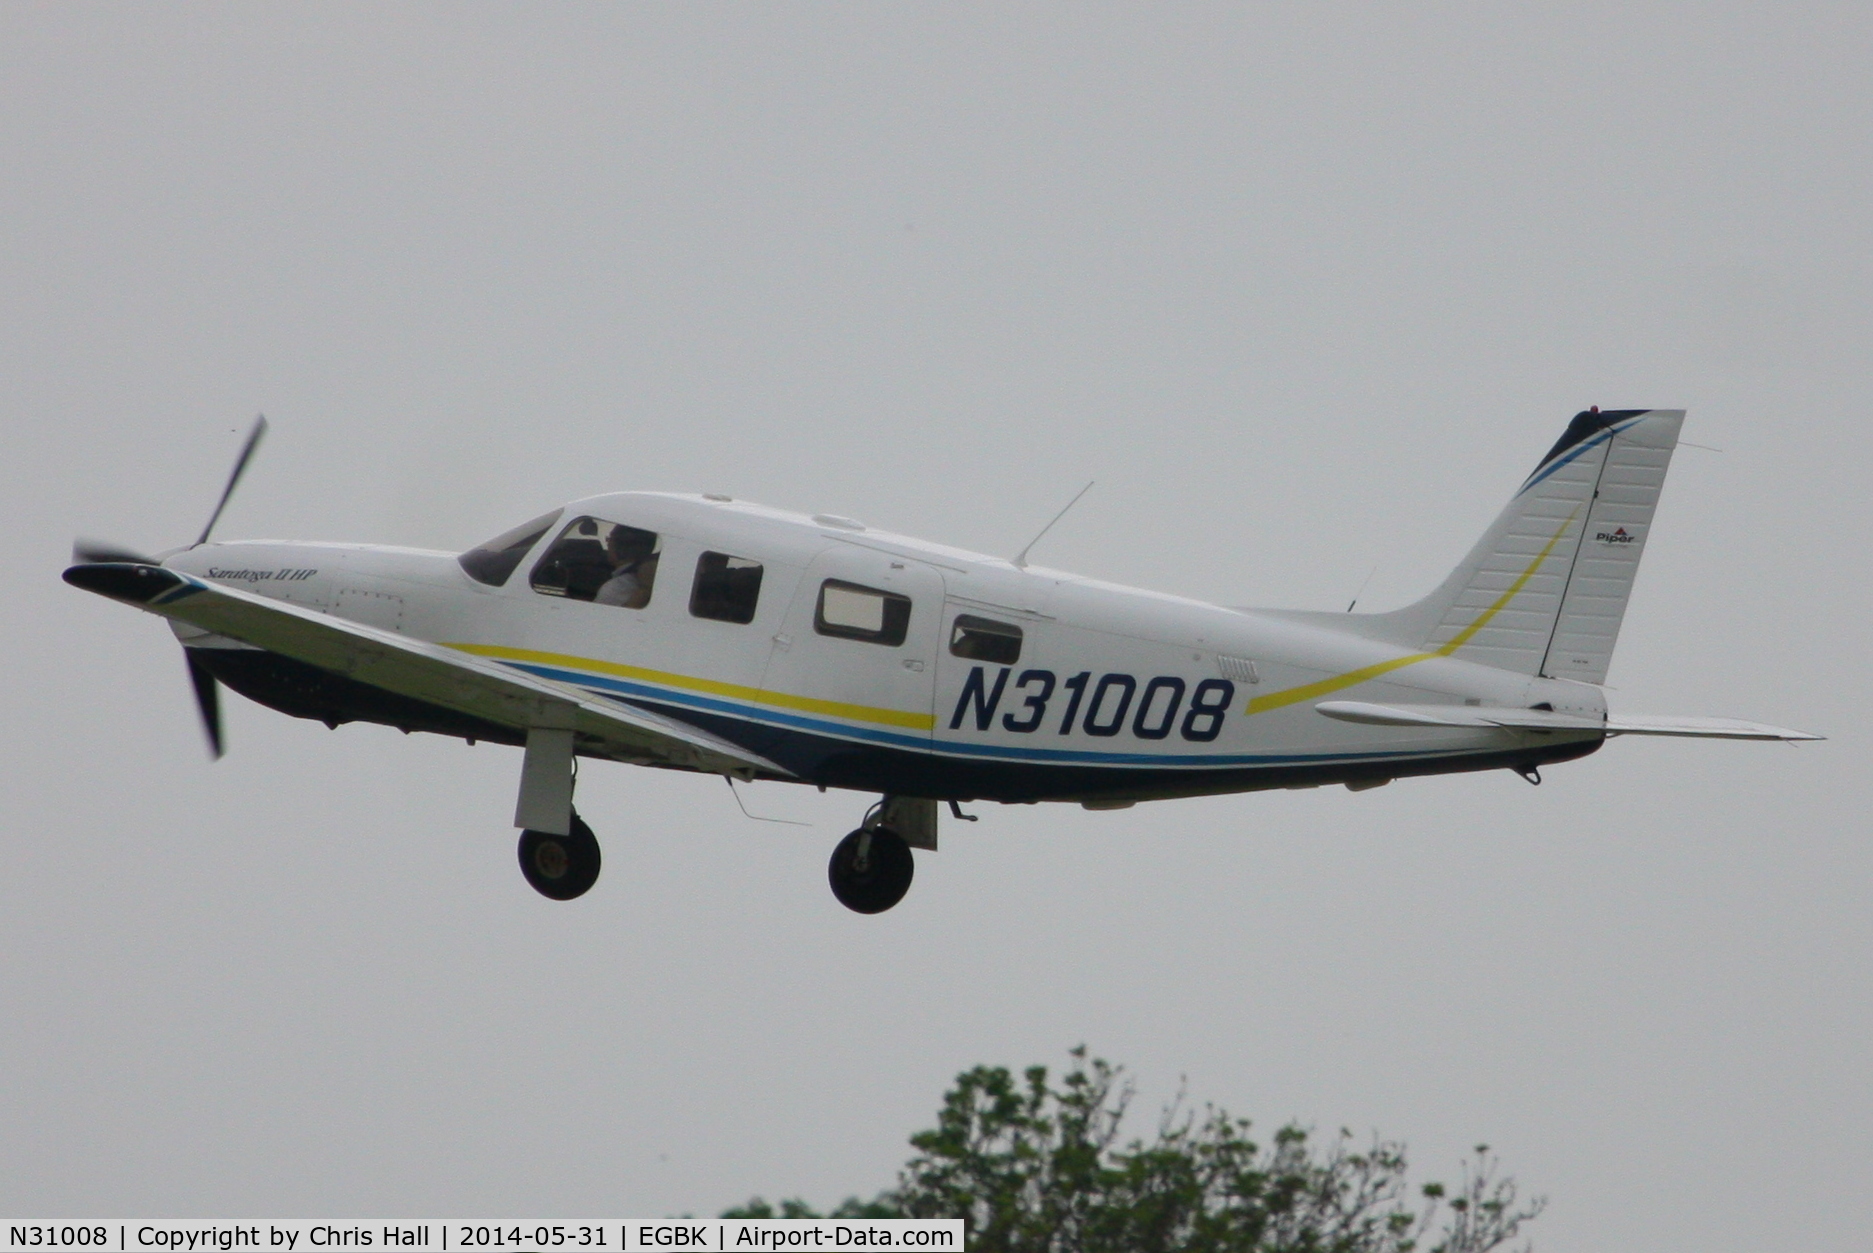 N31008, 2005 Piper PA-32R-301 Saratoga C/N 3246229, at AeroExpo 2014